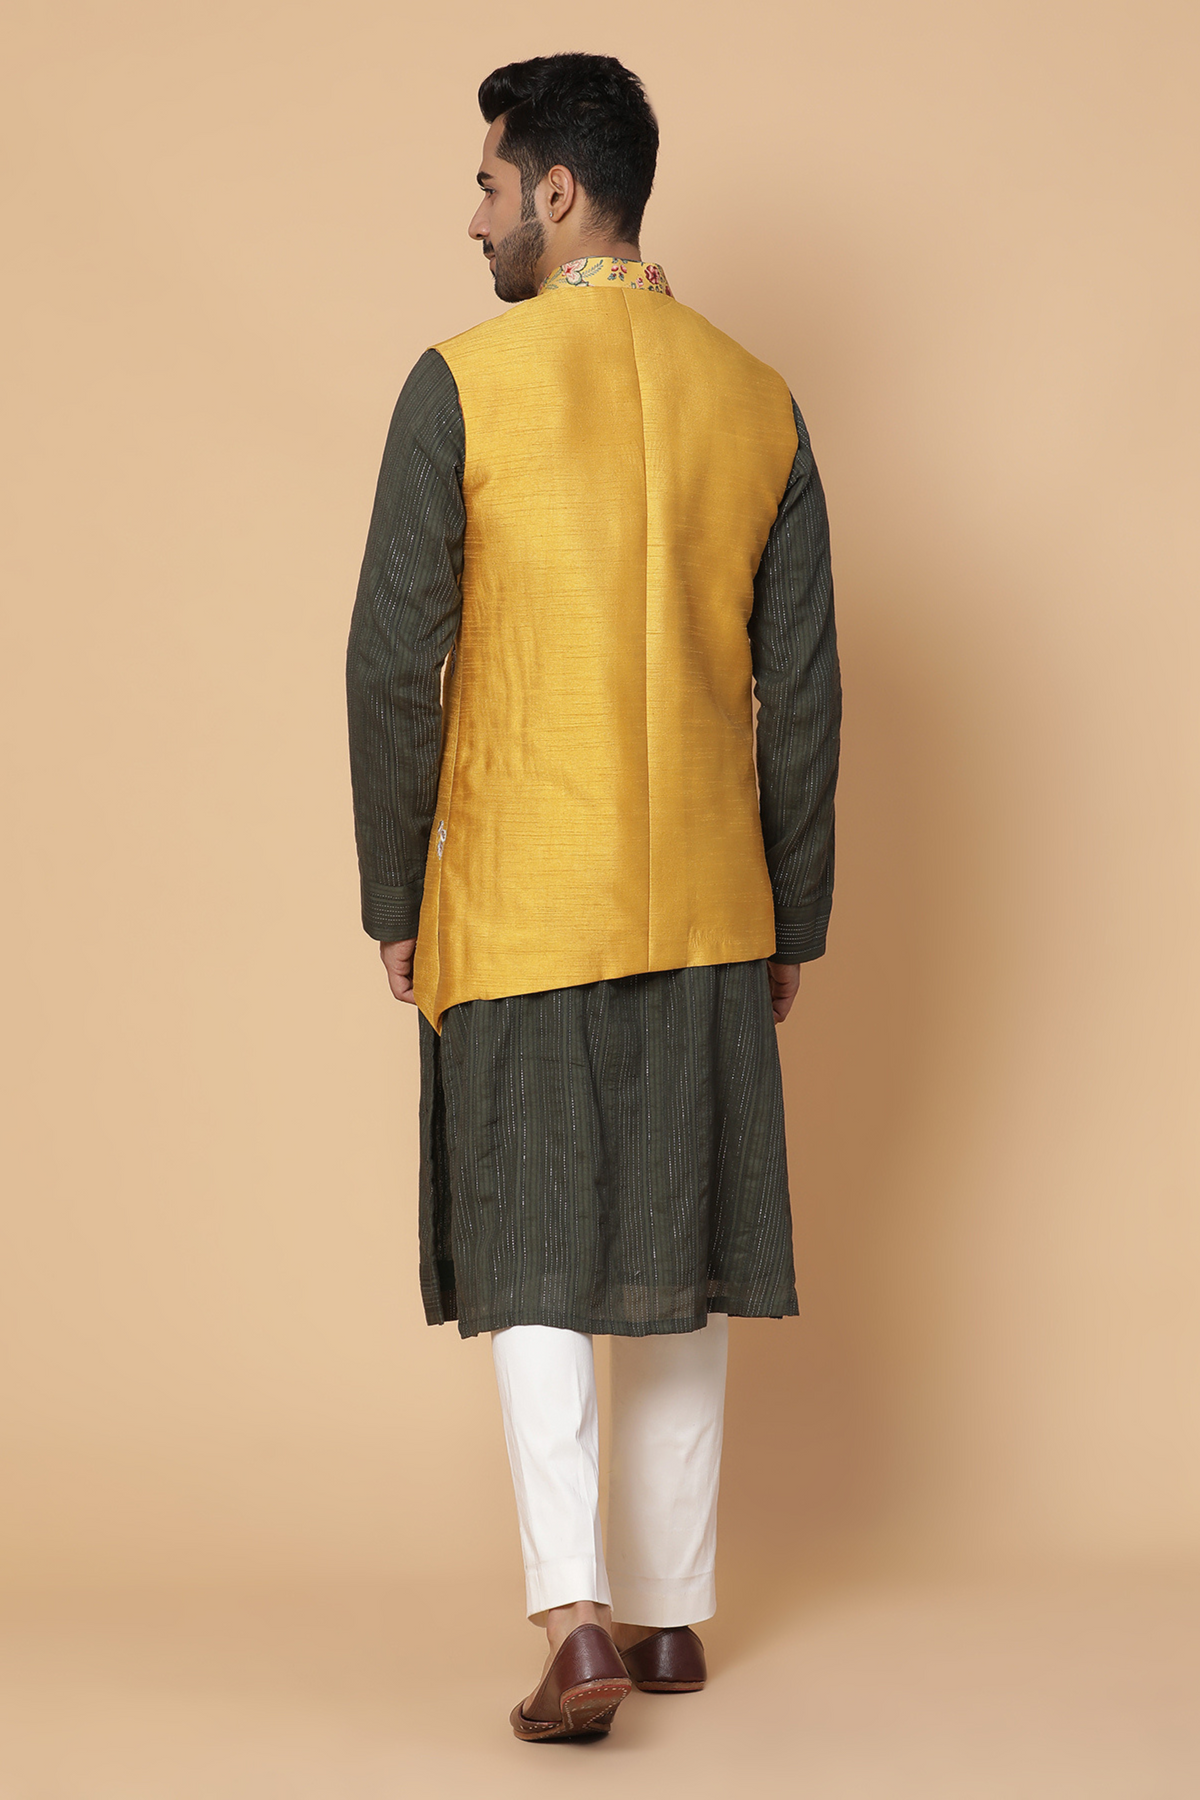 Green and Yellow nehru jacket set